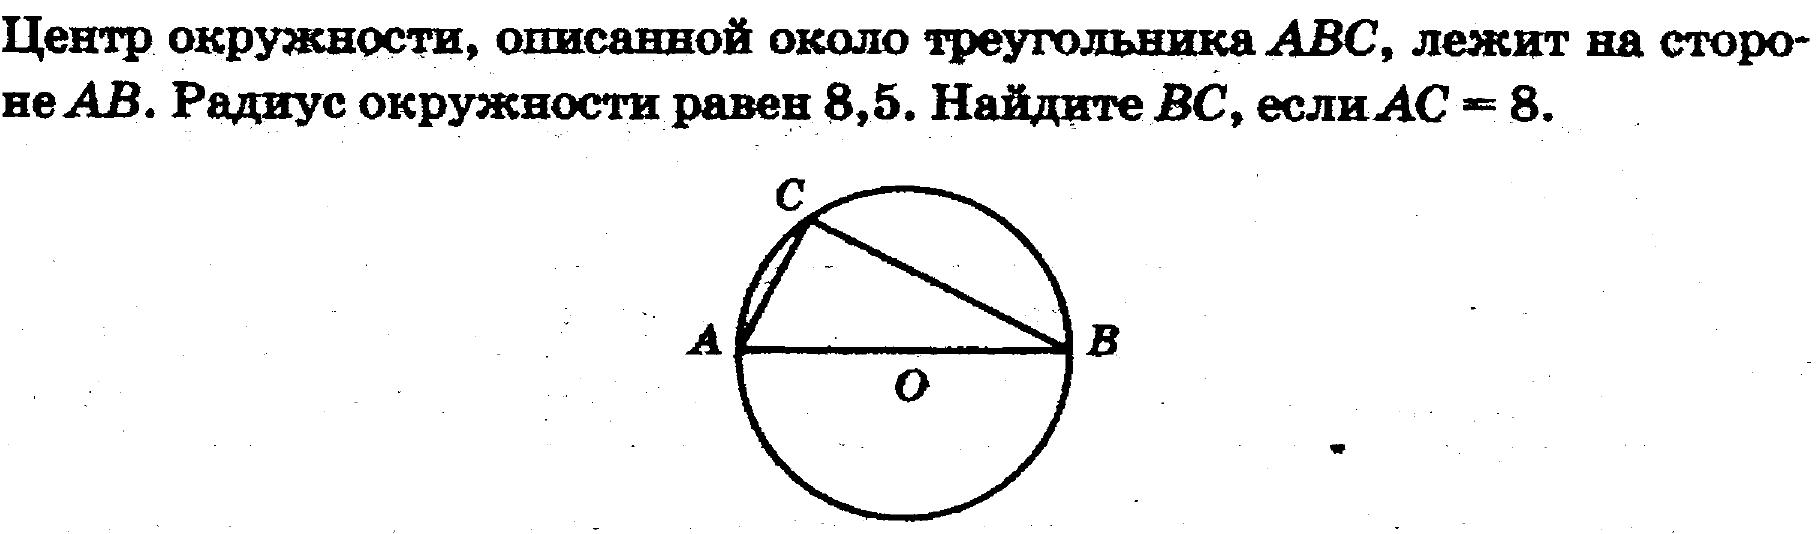 Радиус окружности около треугольника